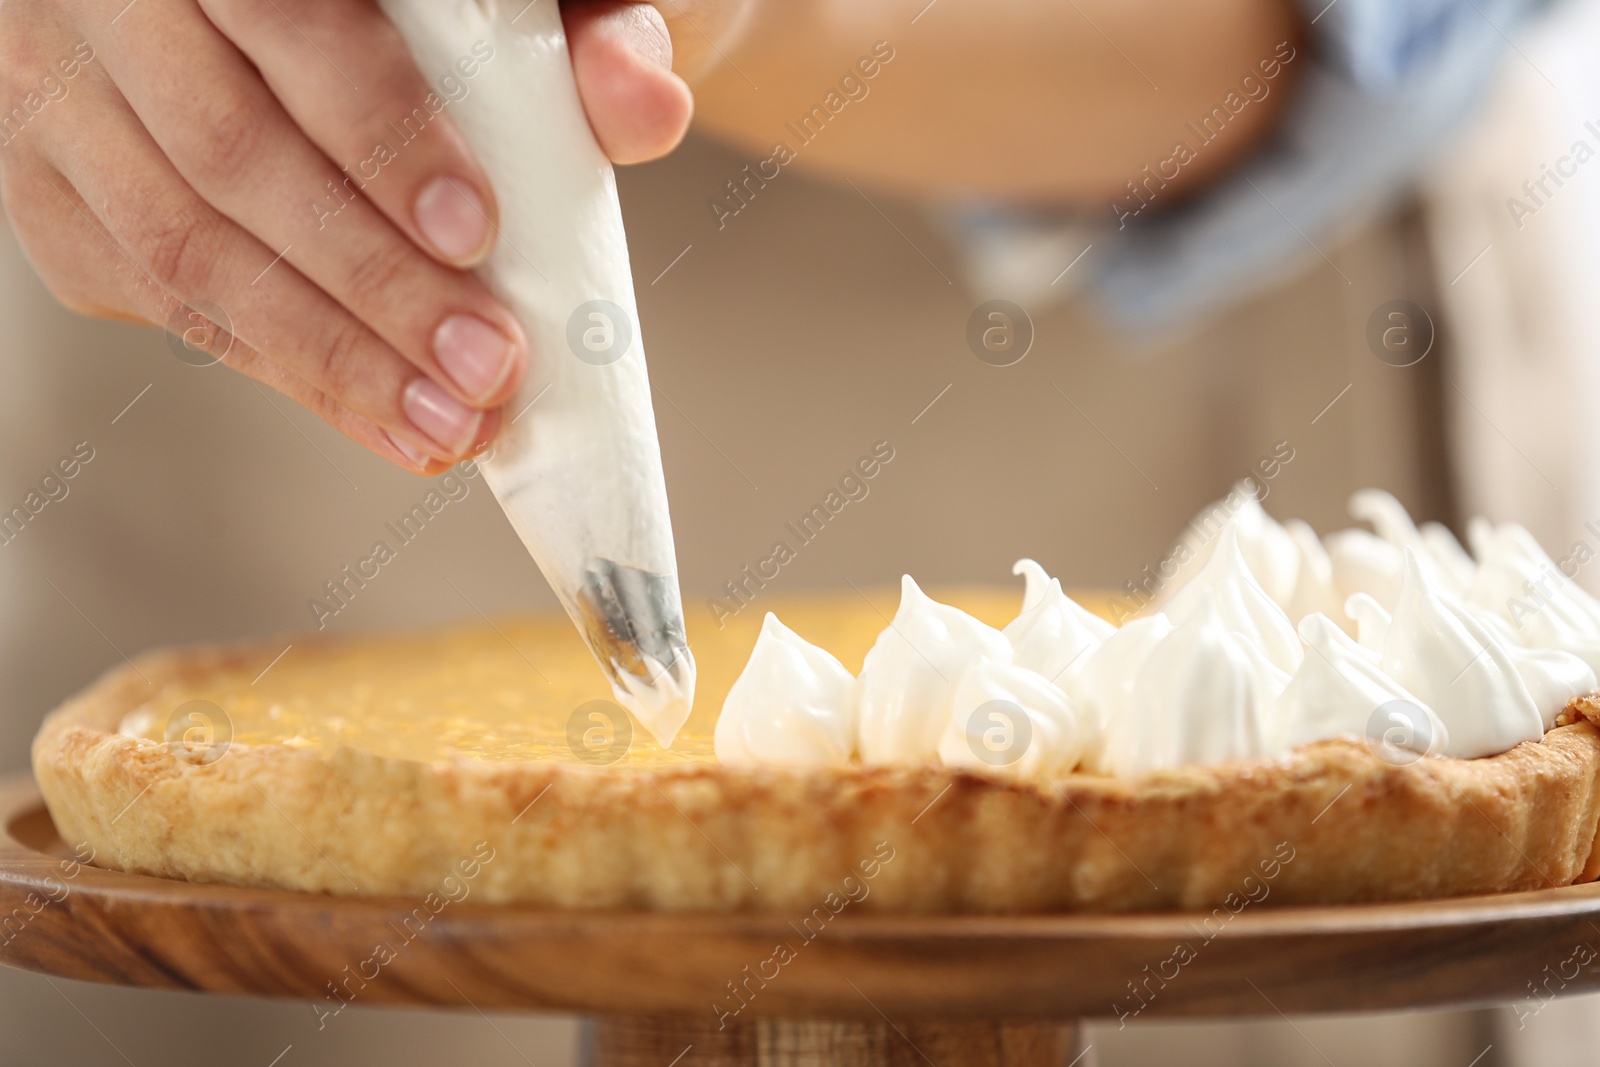 Photo of Woman preparing lemon meringue pie, closeup view